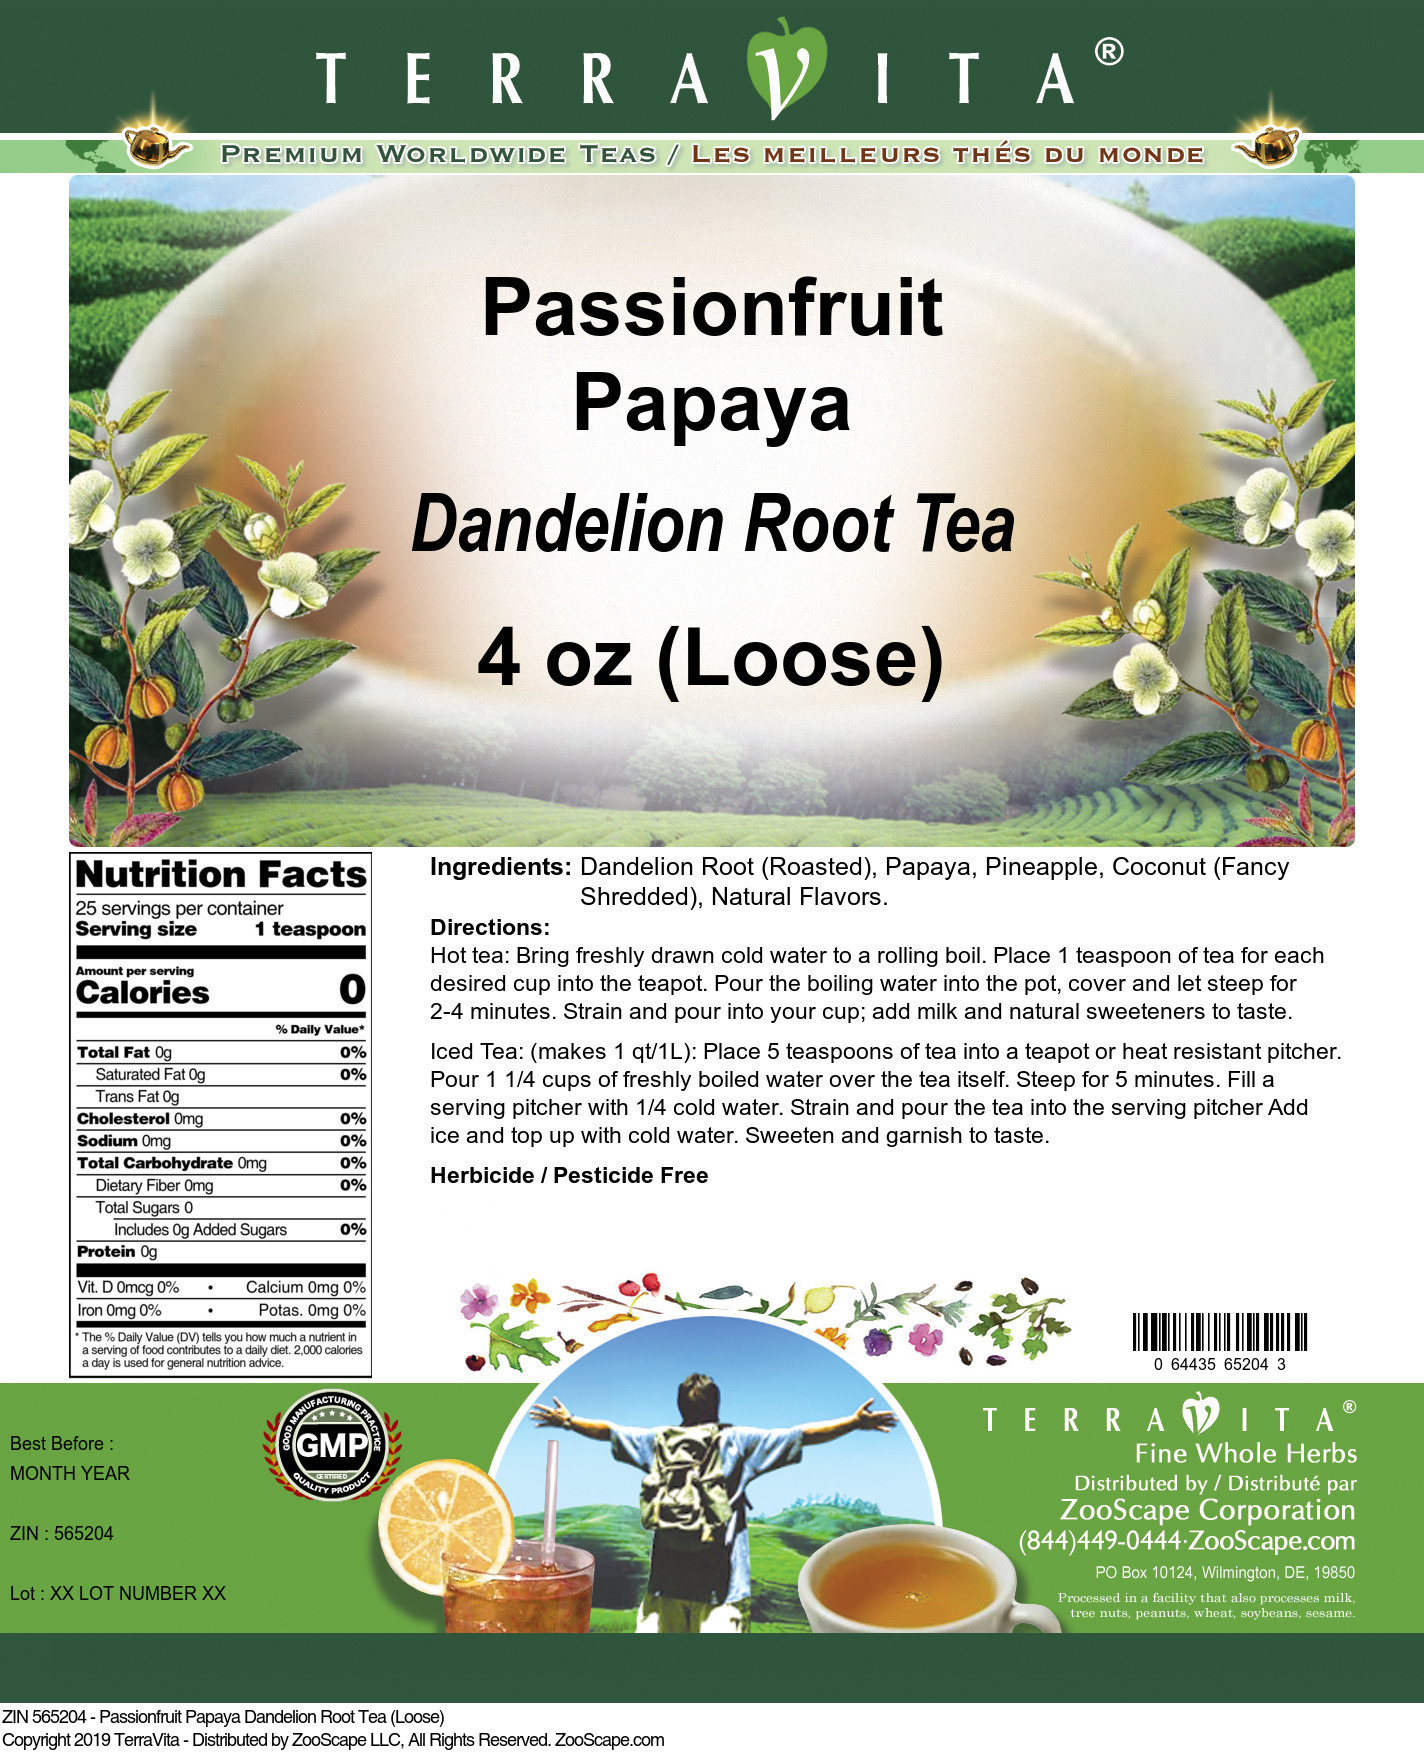 Passionfruit Papaya Dandelion Root Tea (Loose) - Label